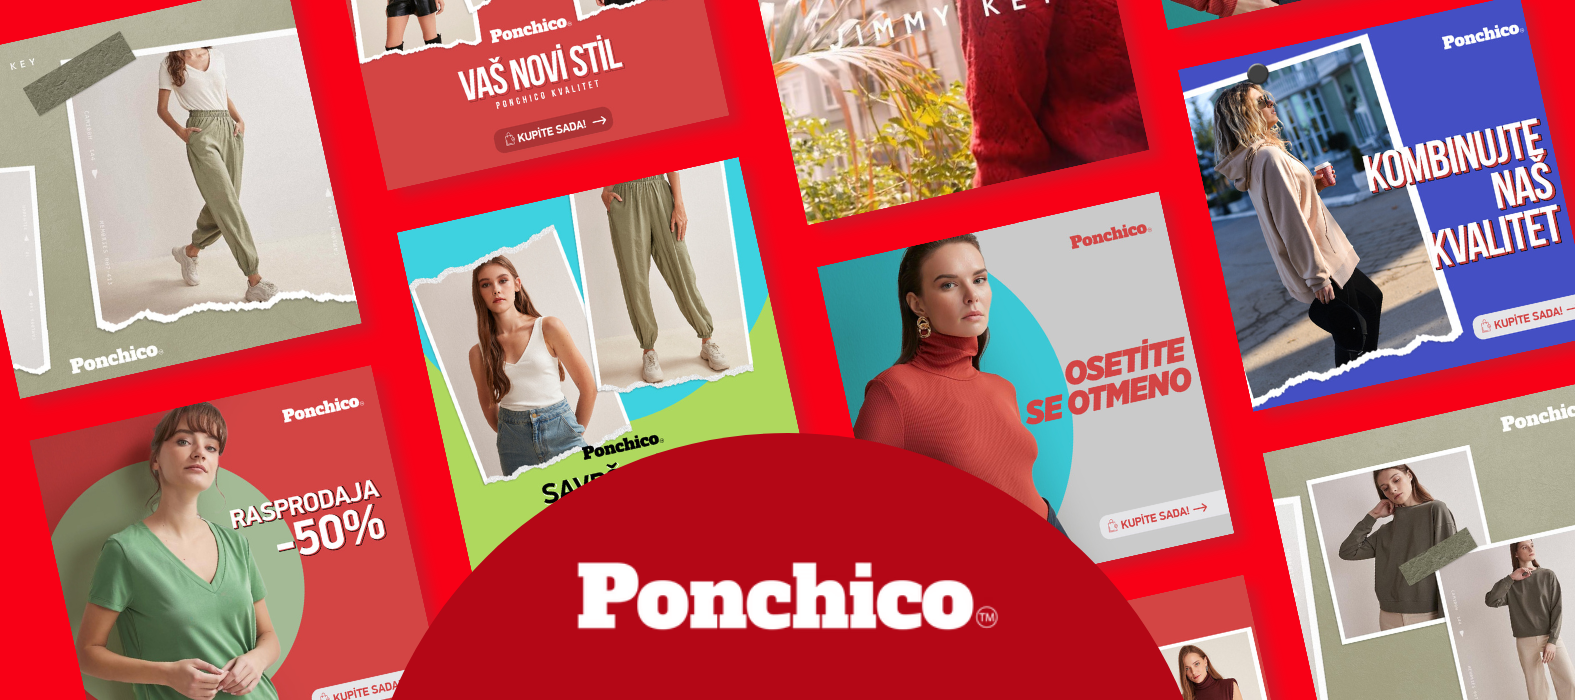 ponchico ads images